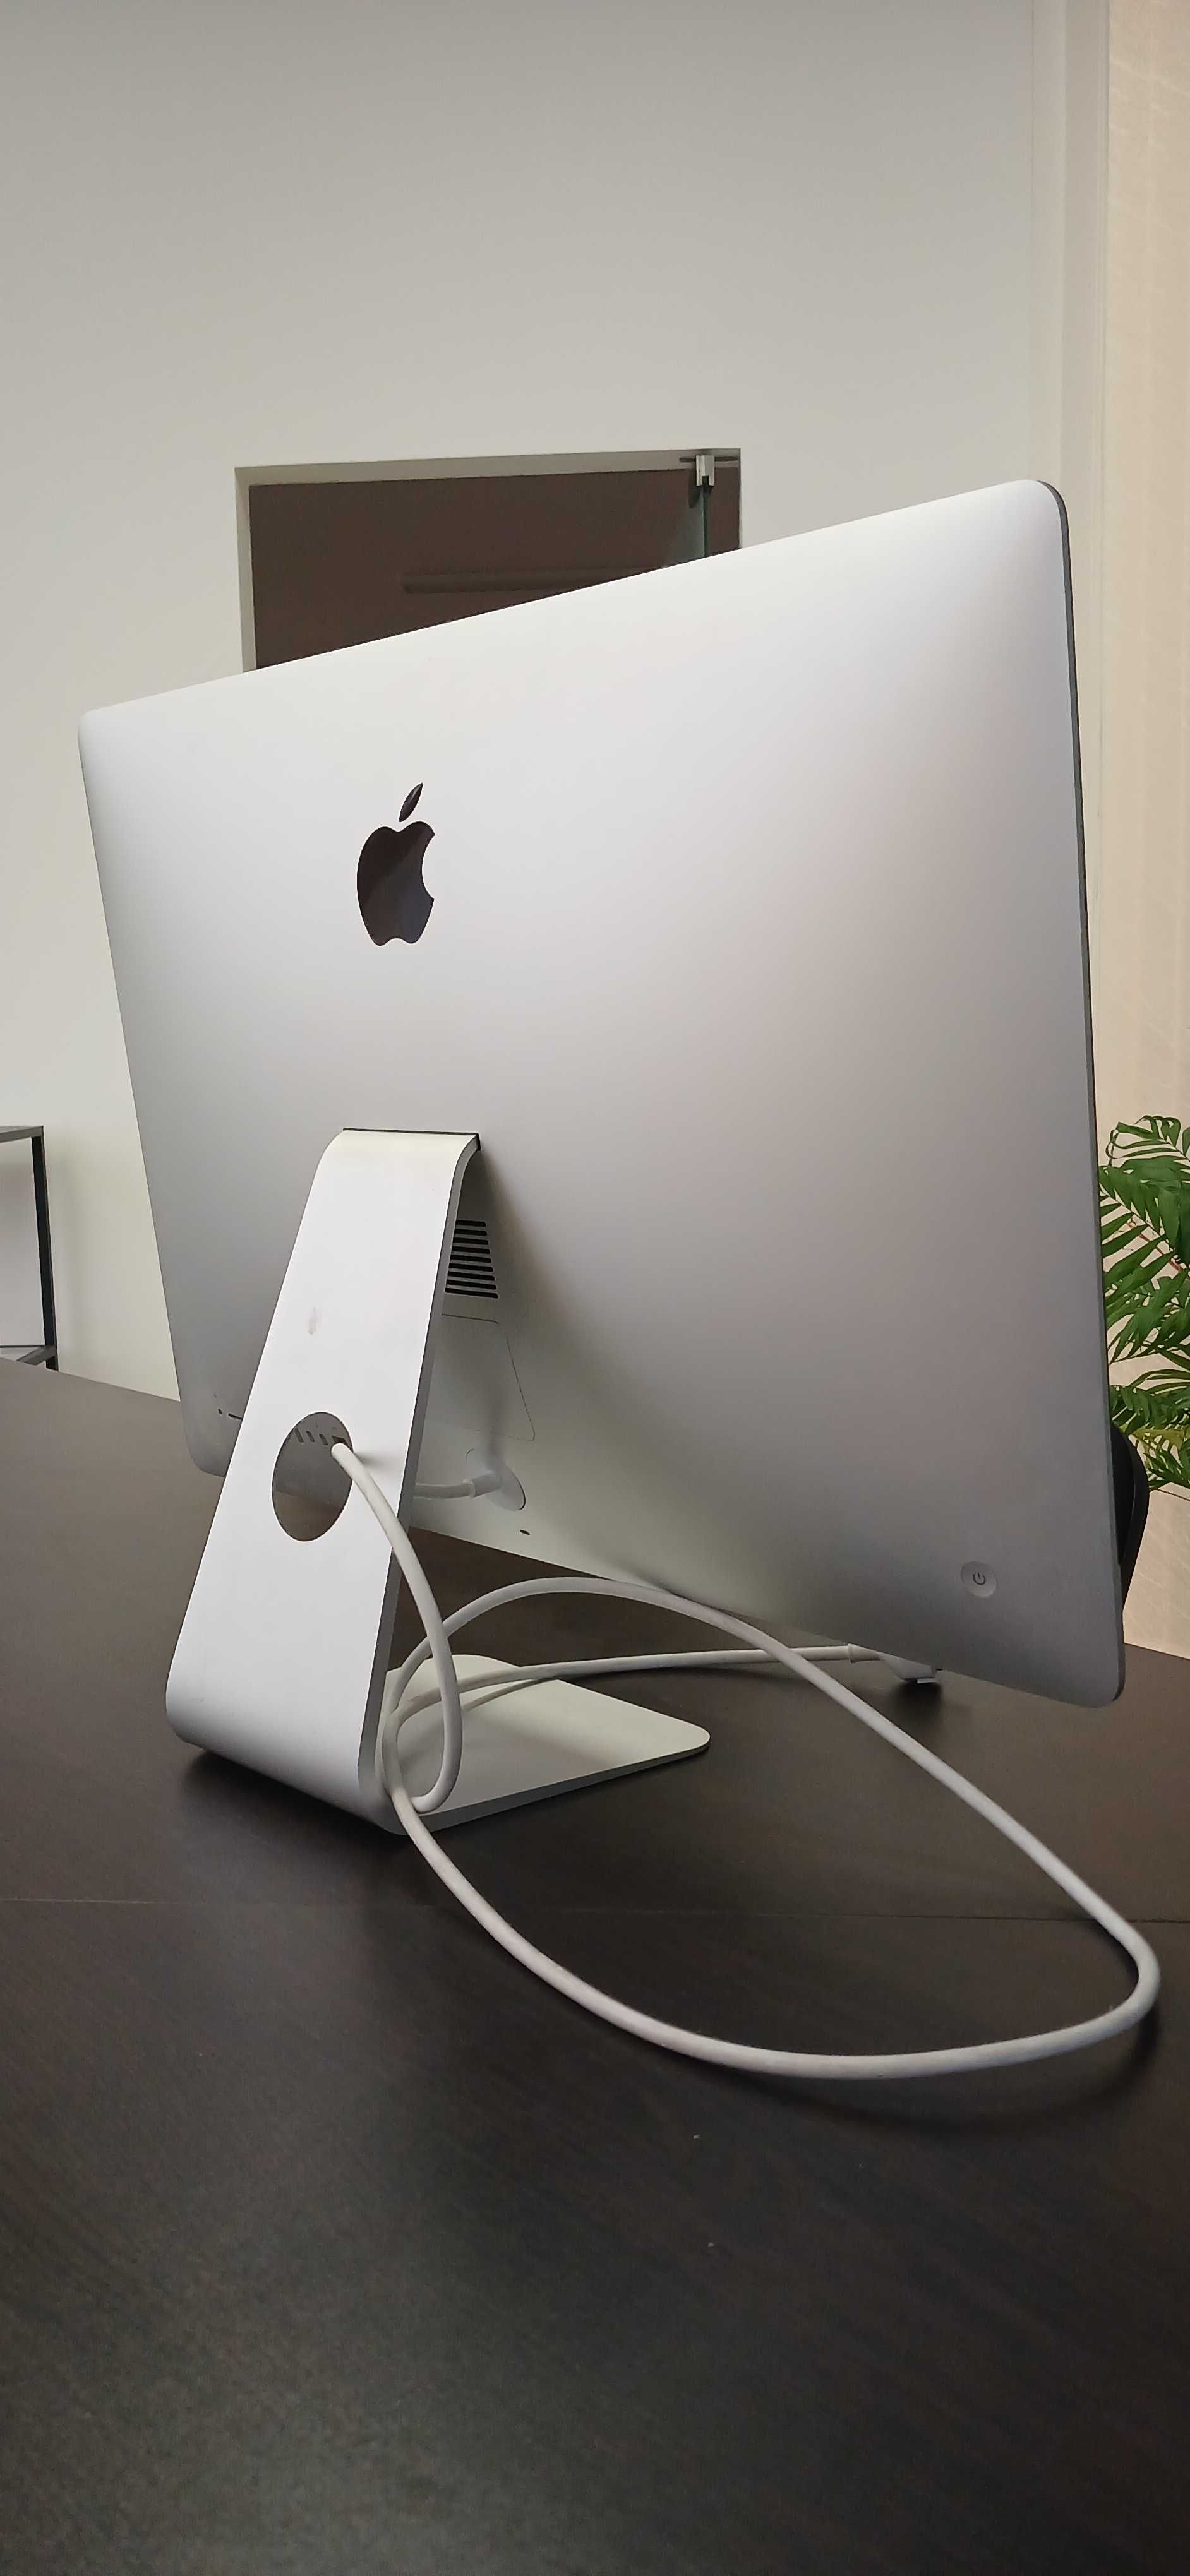 Продам iMac Retina 5K, 27-inch ( Late 2015)